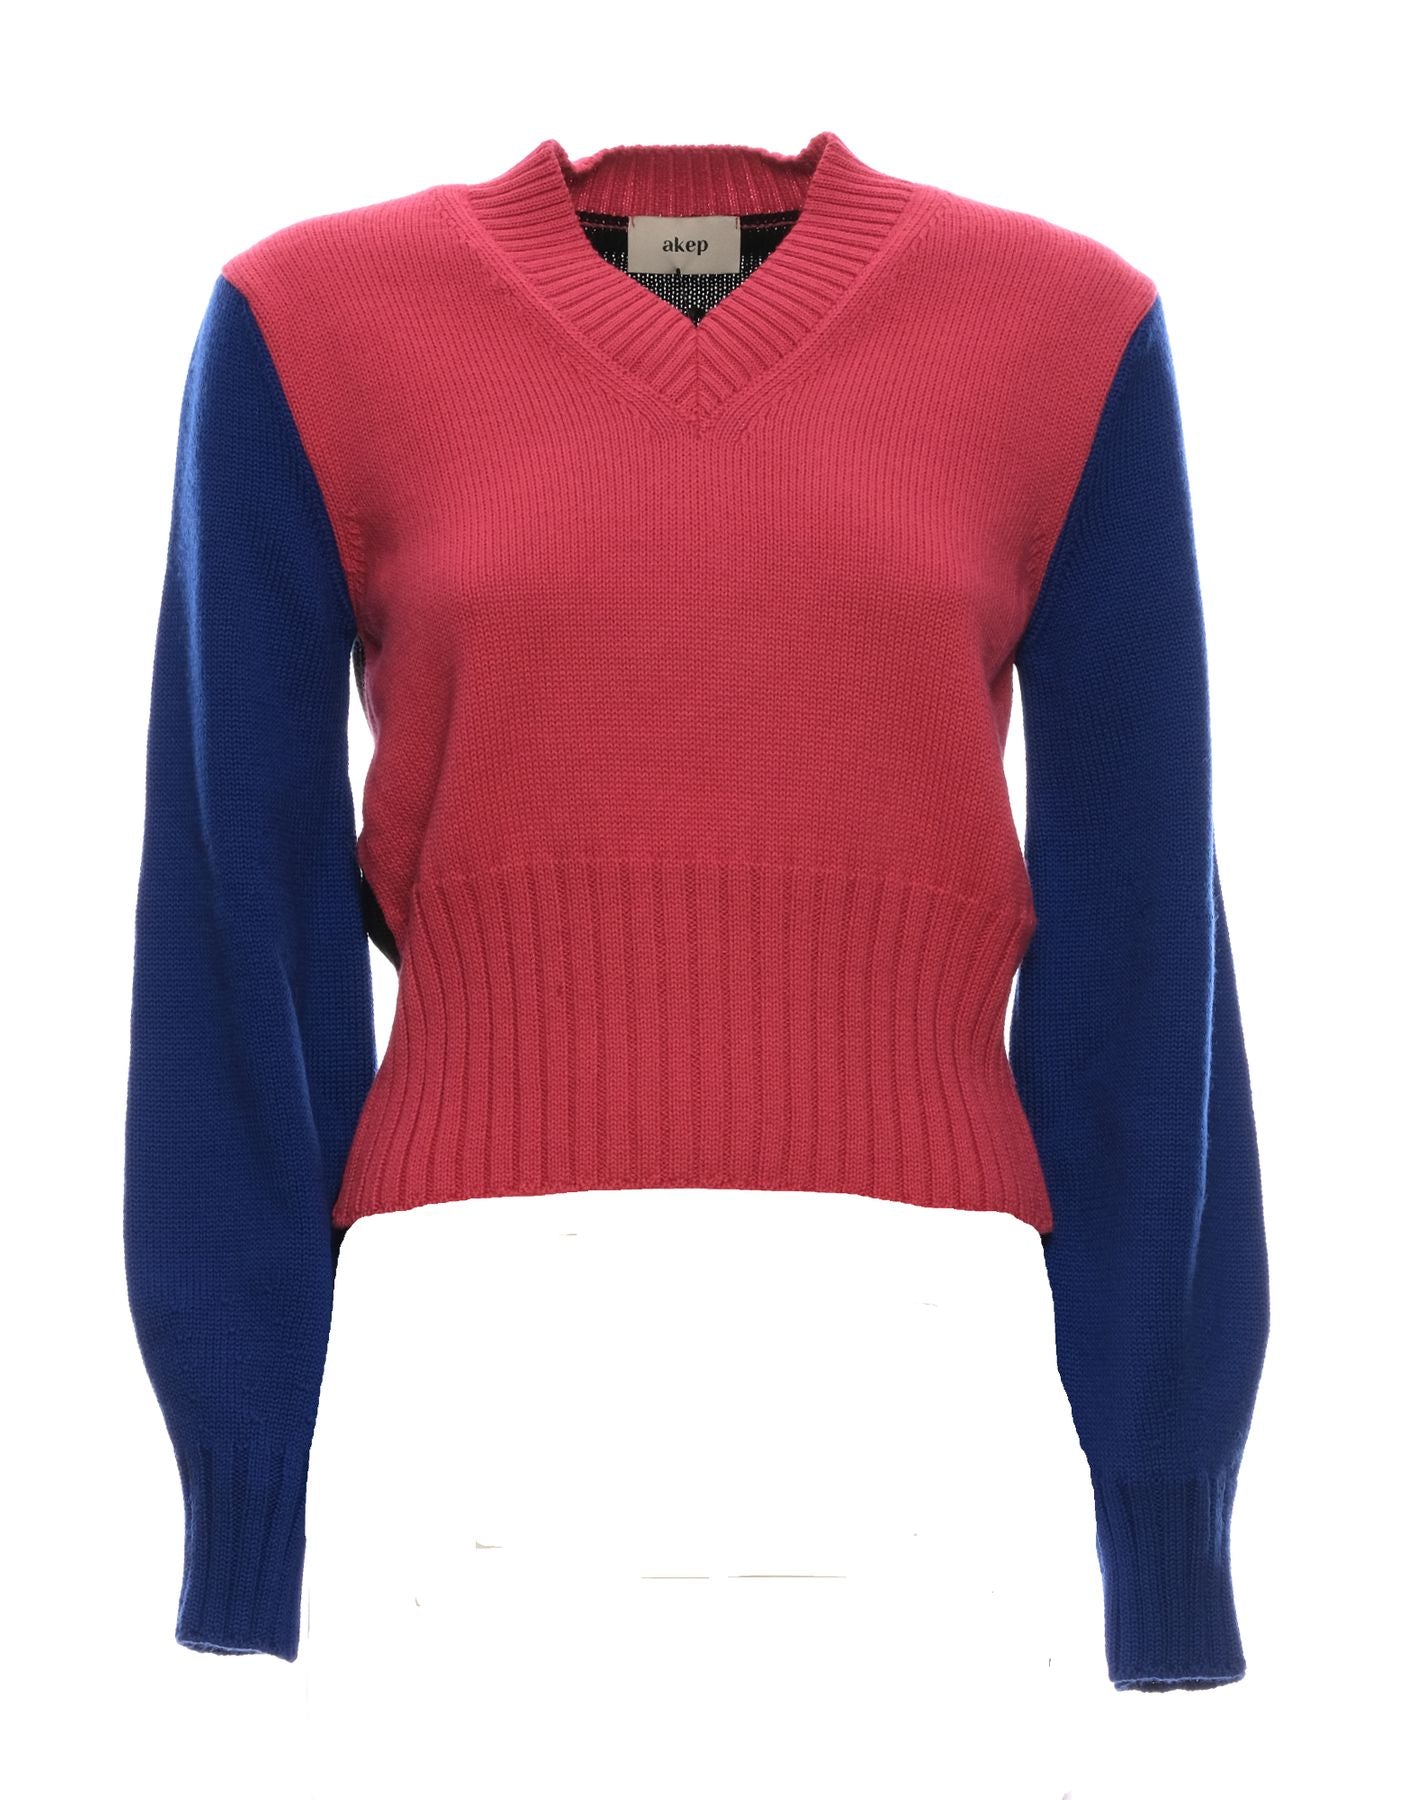 Sweater Woman Akep K11039 Variante 1